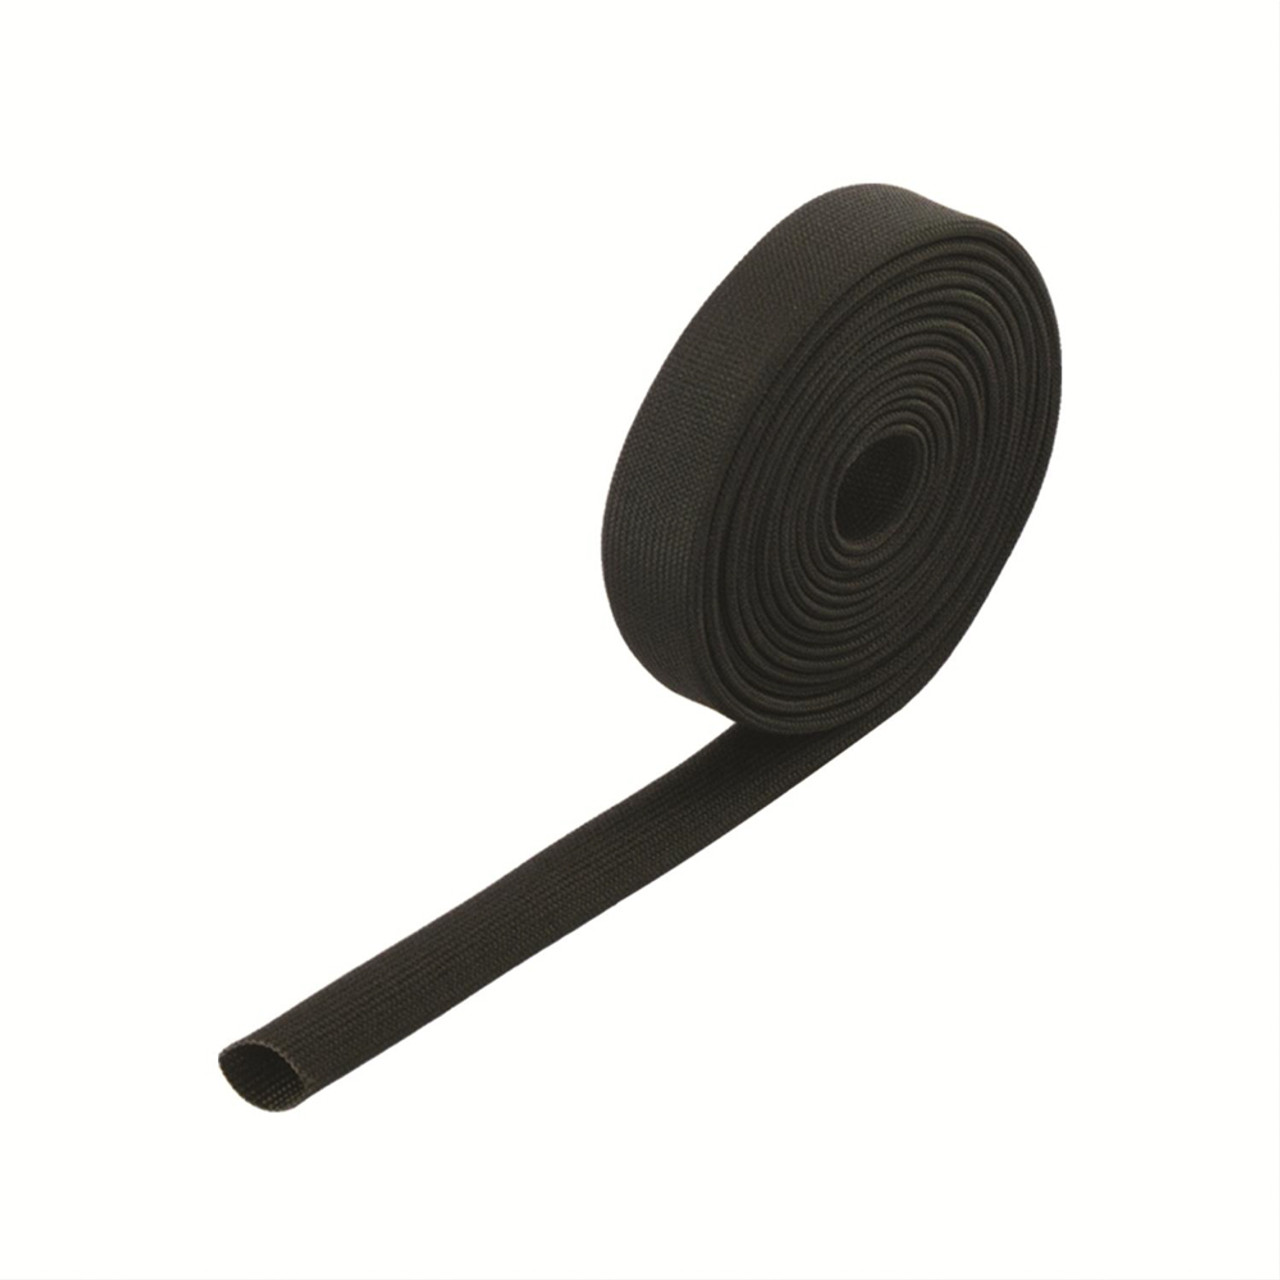 Heatshield Products Hot Rod Sleeve 1 in id x 10 ft - HSP204018